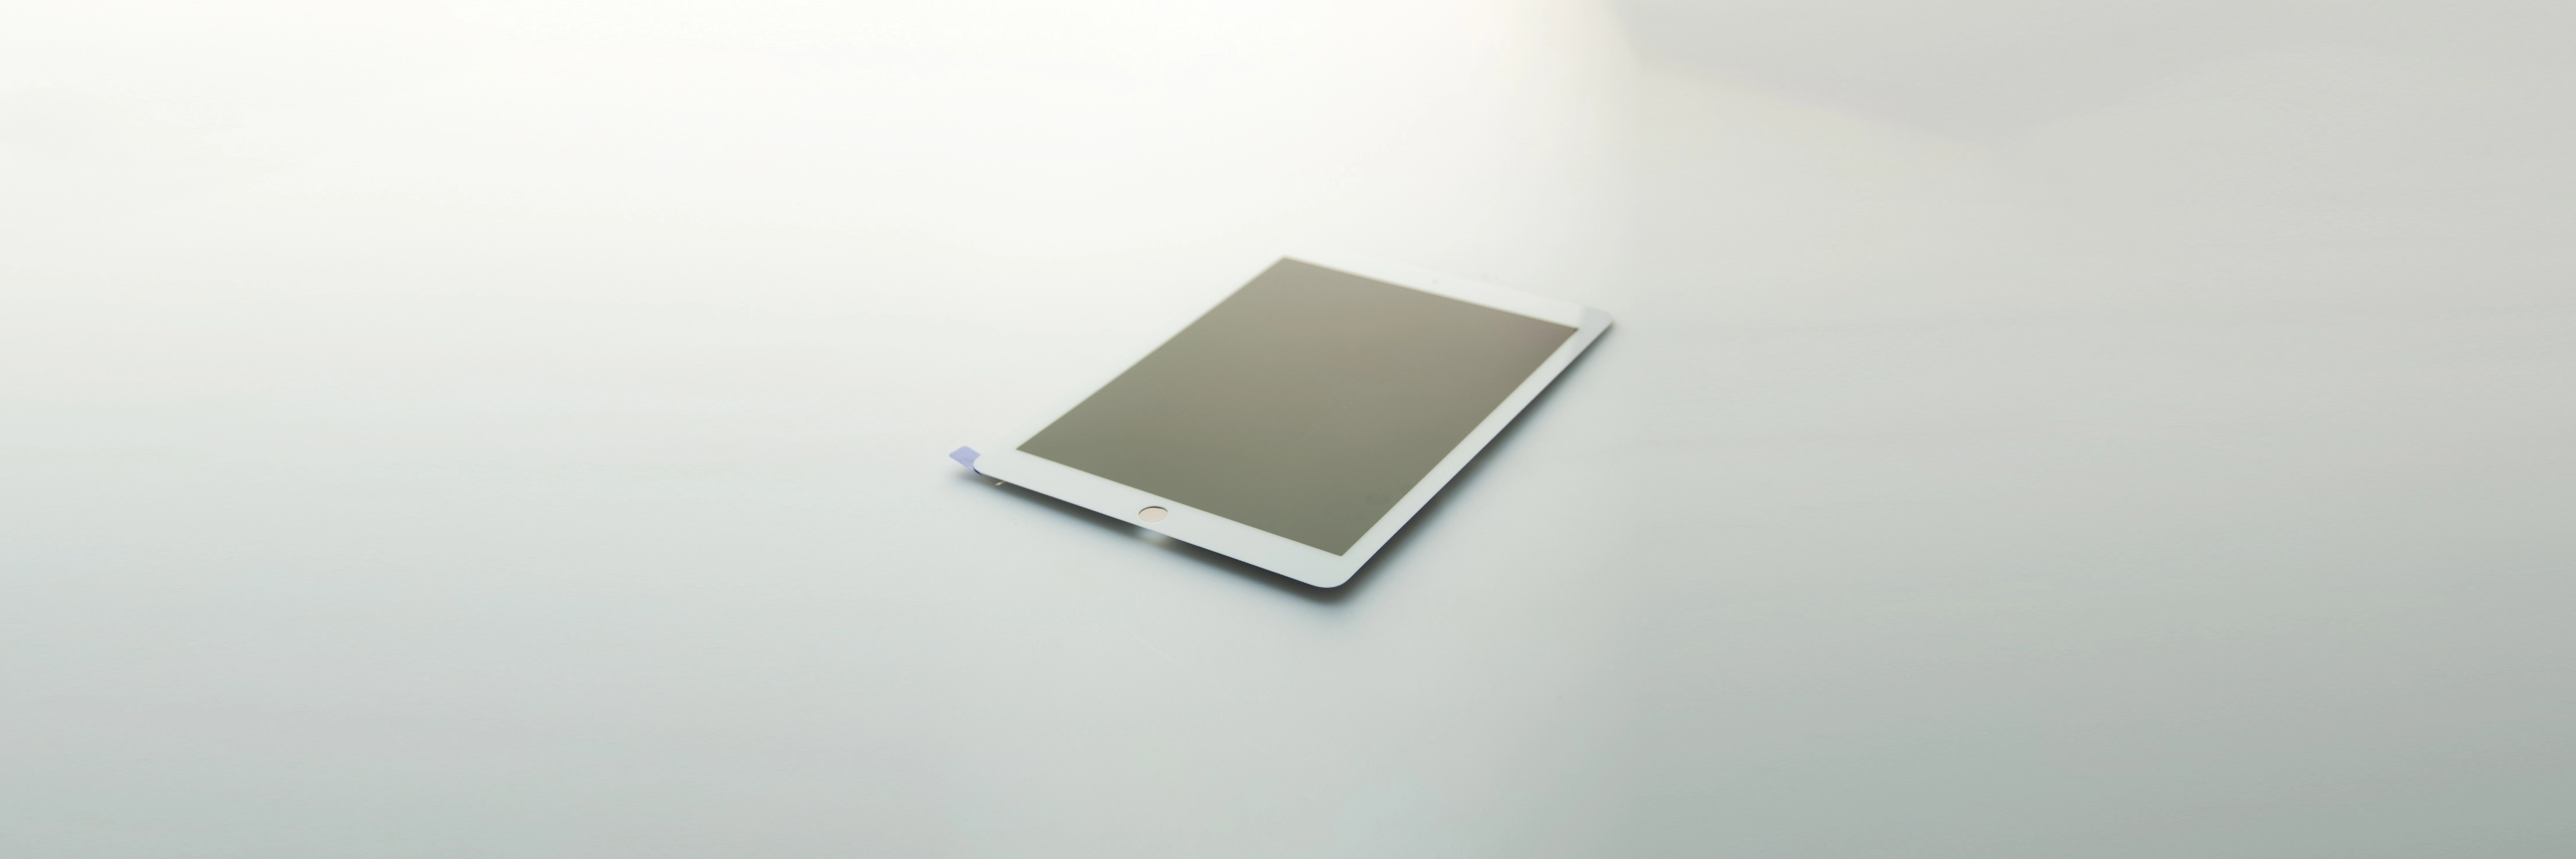 Ersetzen des iPad Pro 9.7 LCD-Kits